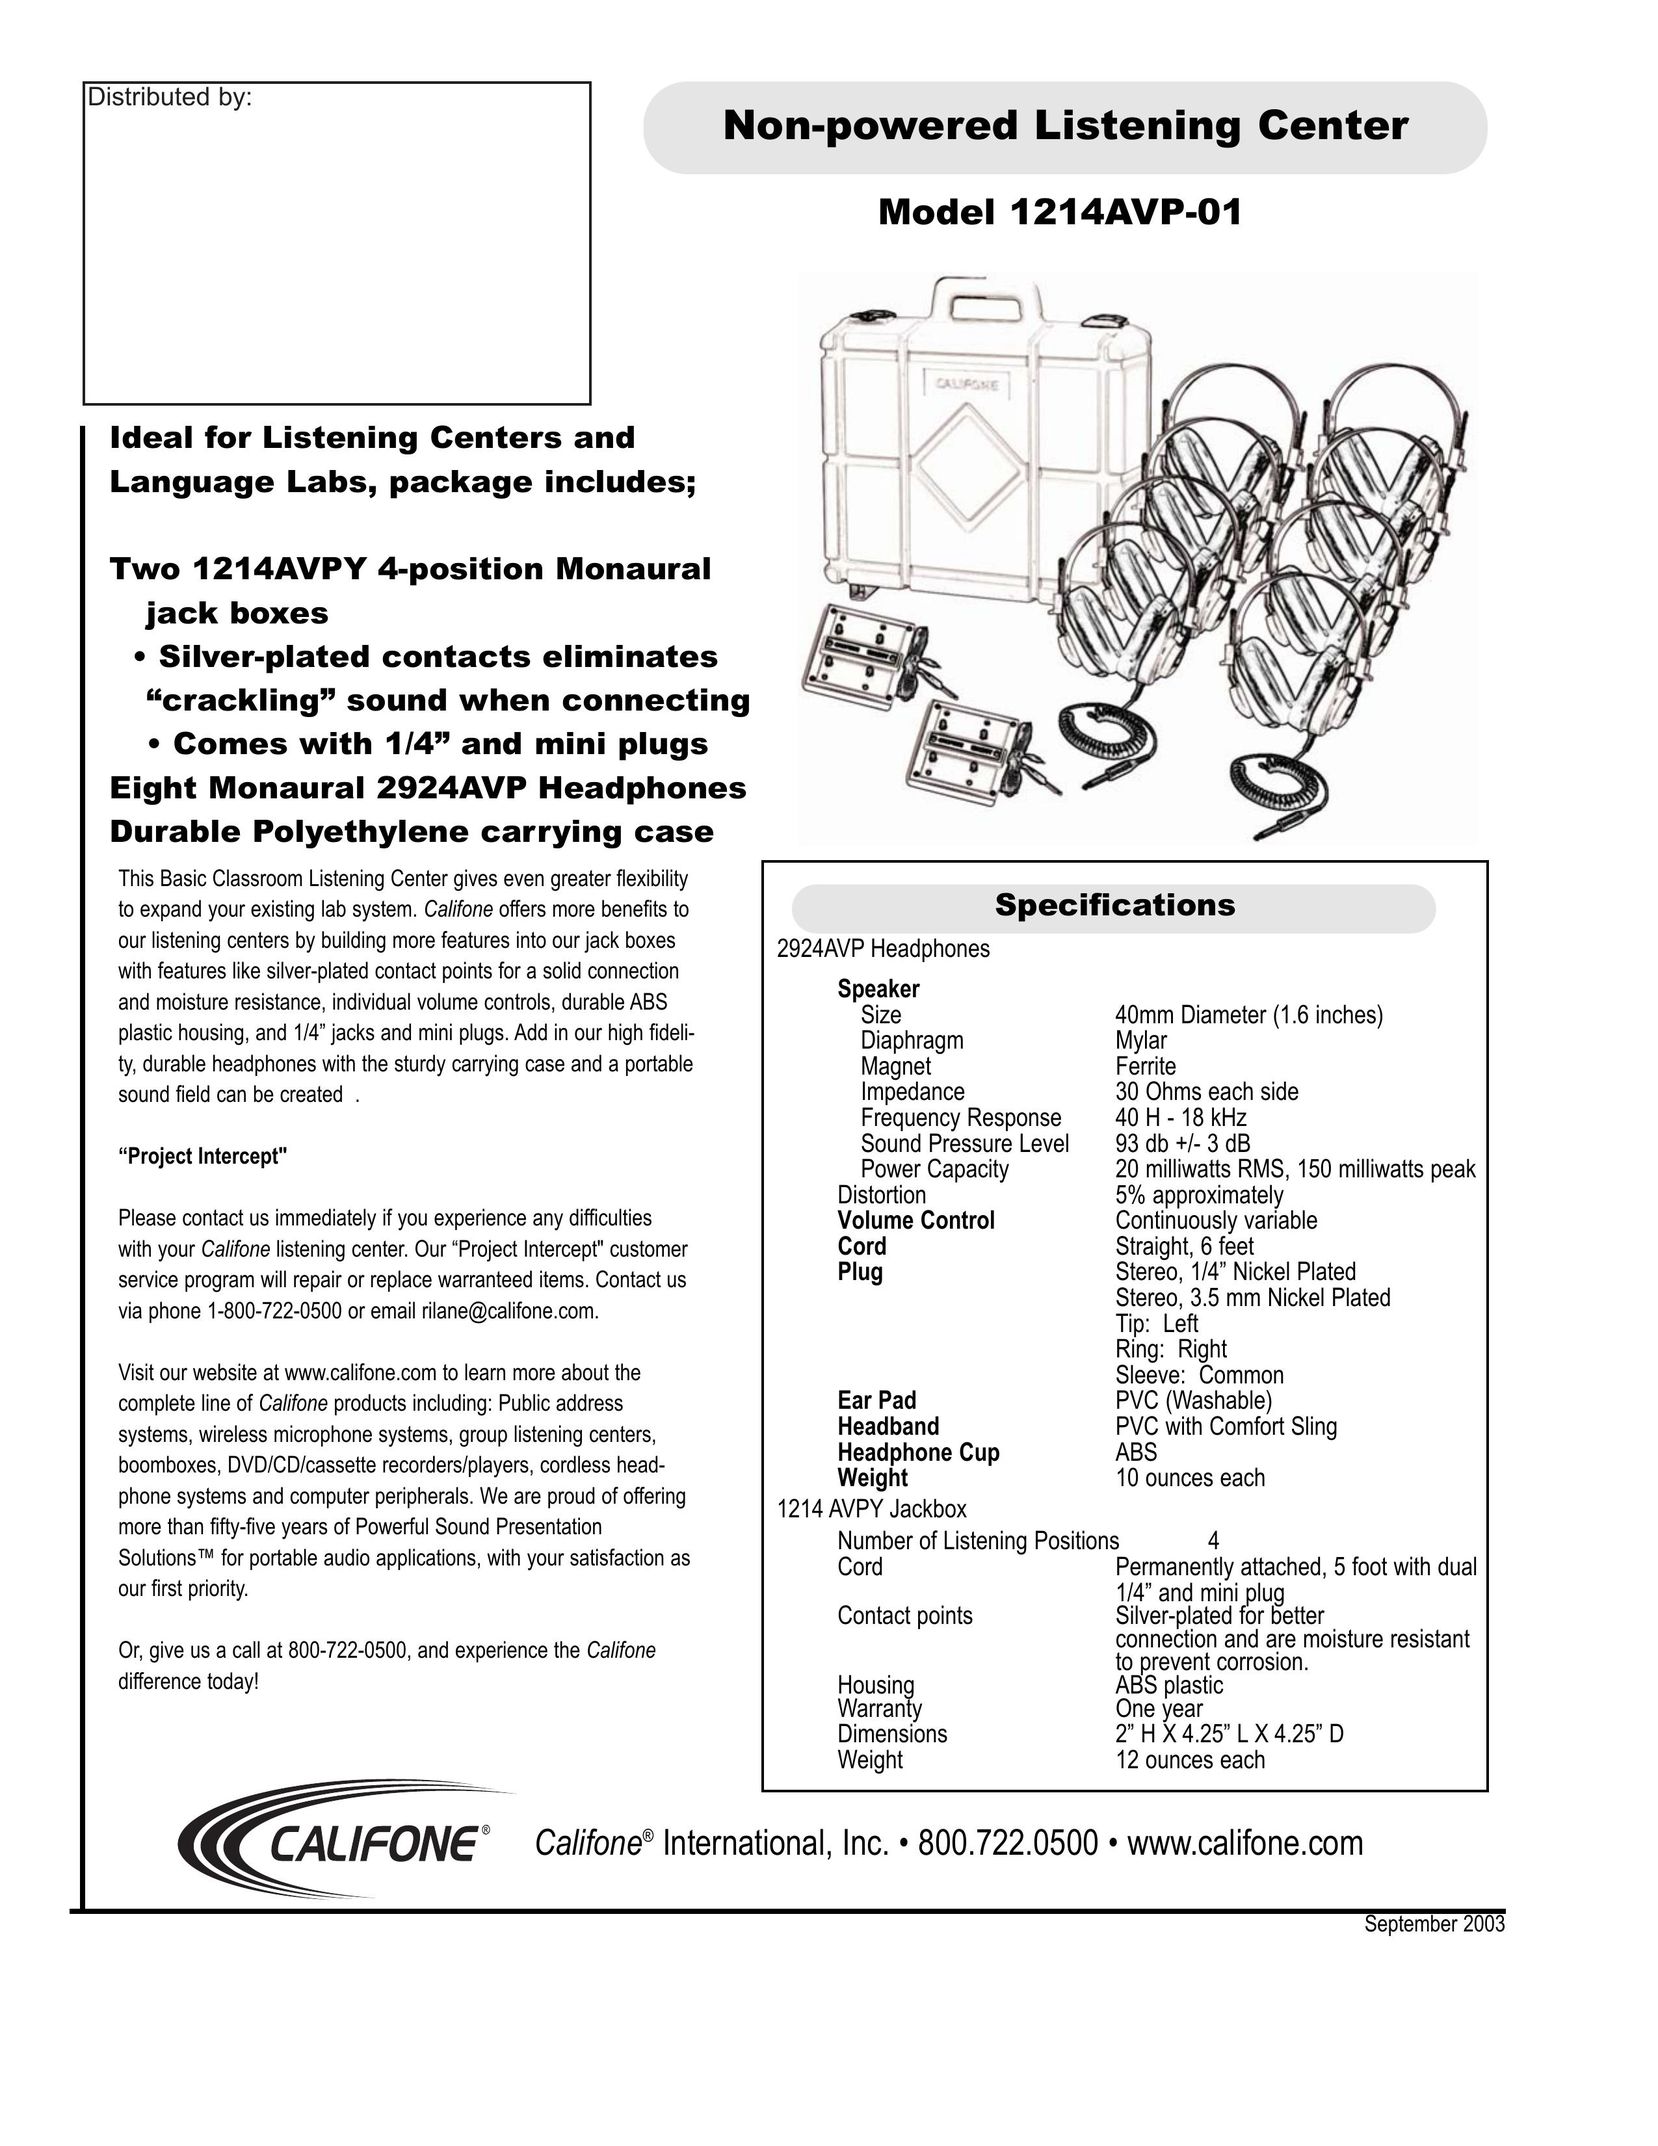 Califone 1214AVP-01 Stereo System User Manual